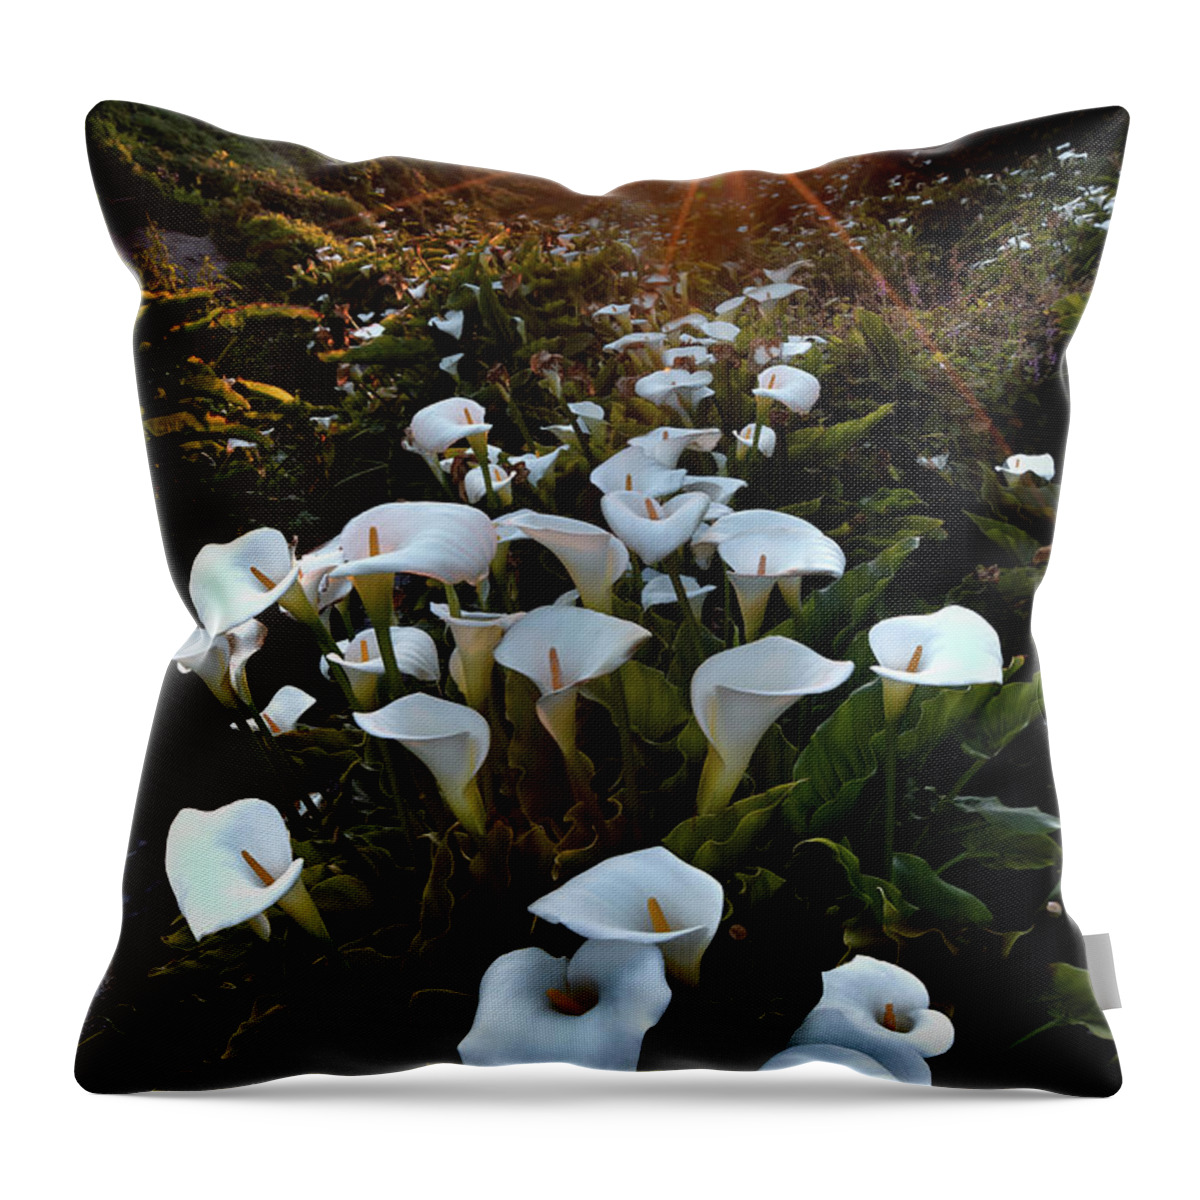 Big Sur Throw Pillow featuring the photograph Coastal Calla Lilies by Ryan Smith